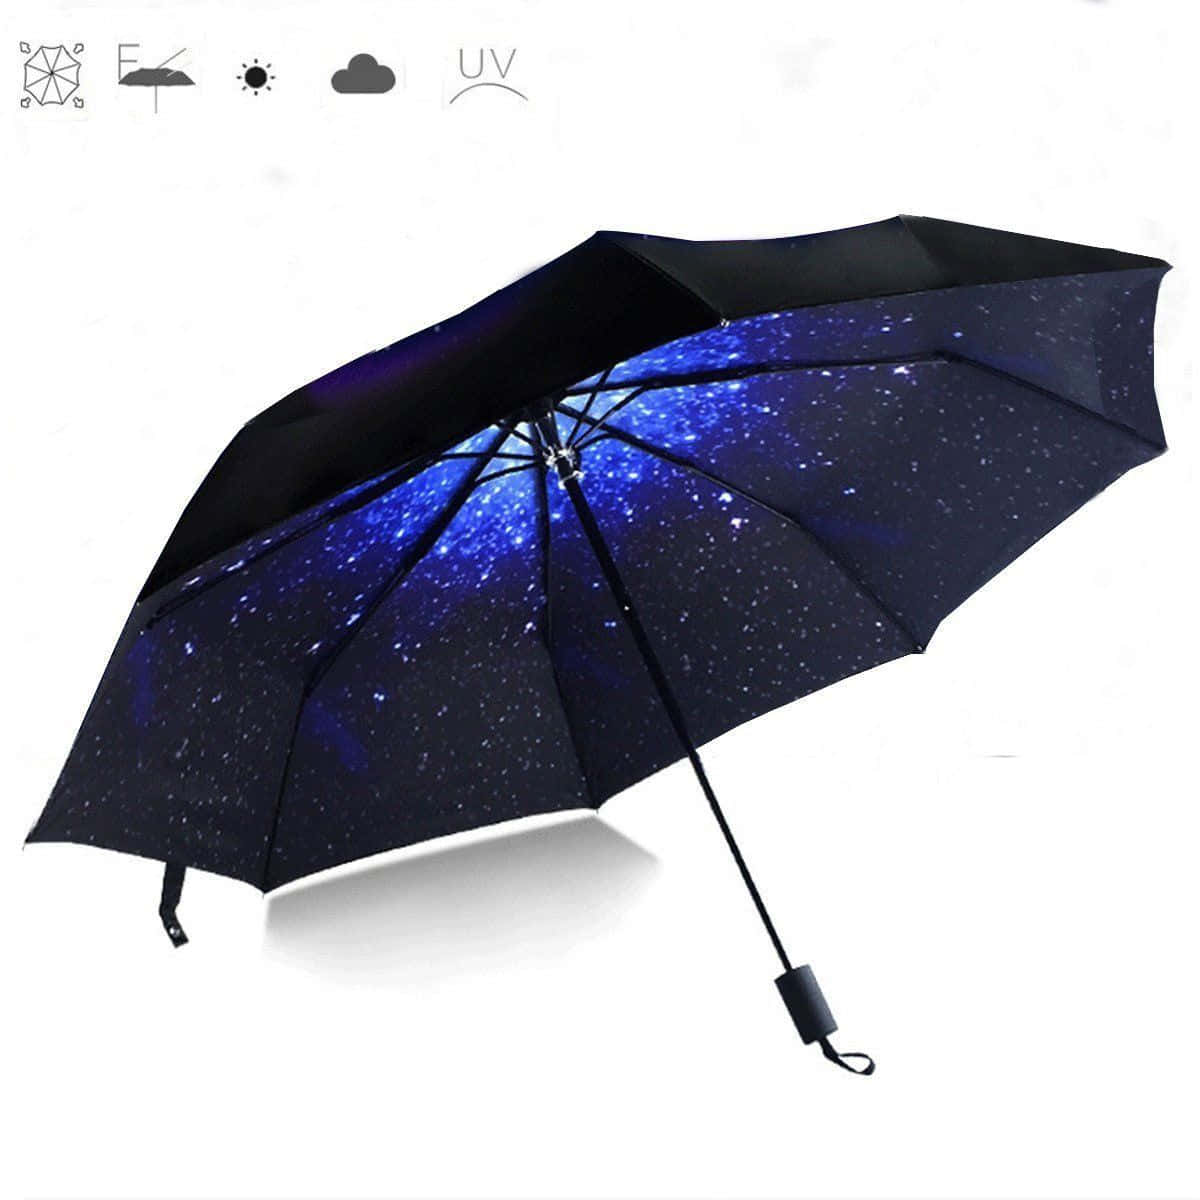 Enblå Paraply Med En Stjärnklar Design